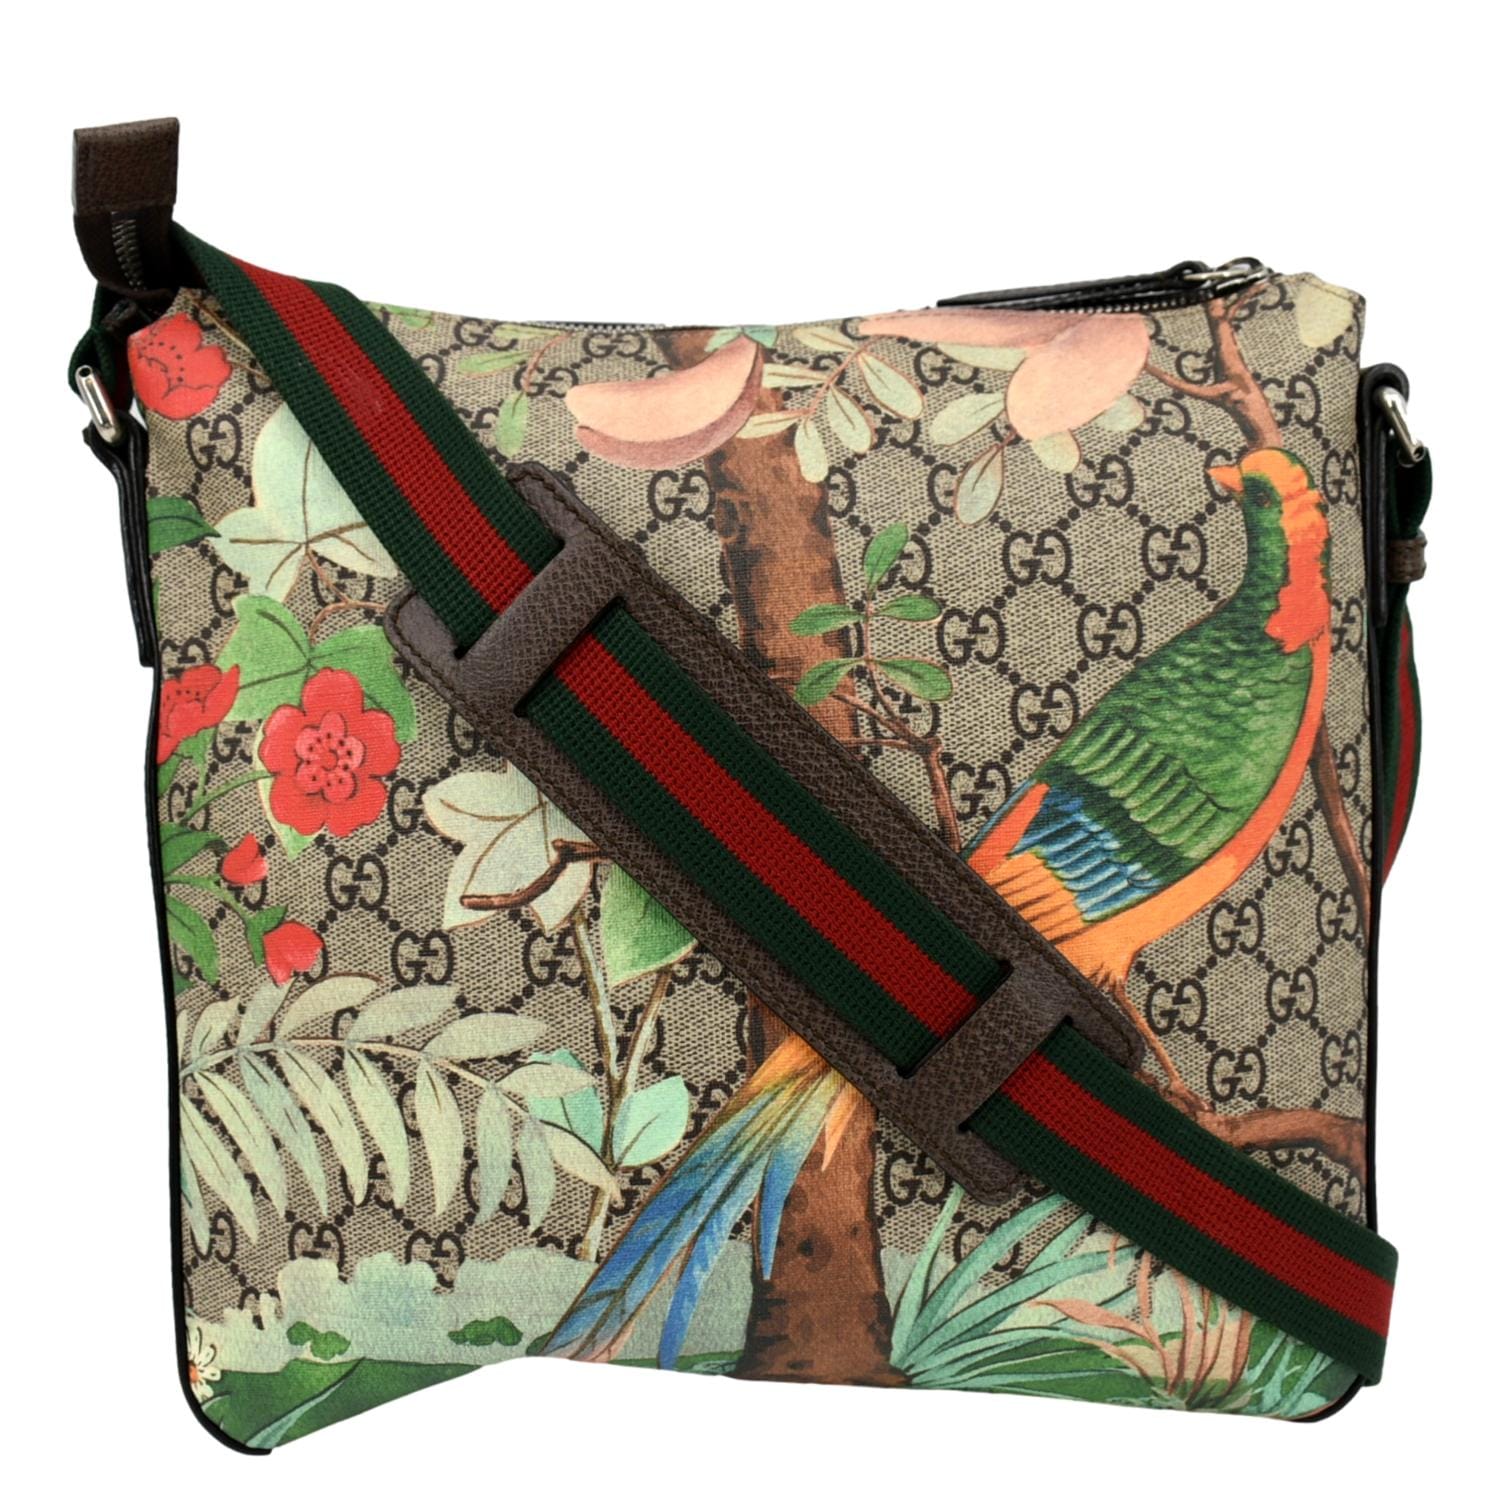 Gucci Courrier Zip GG Supreme Canvas Messenger Bag